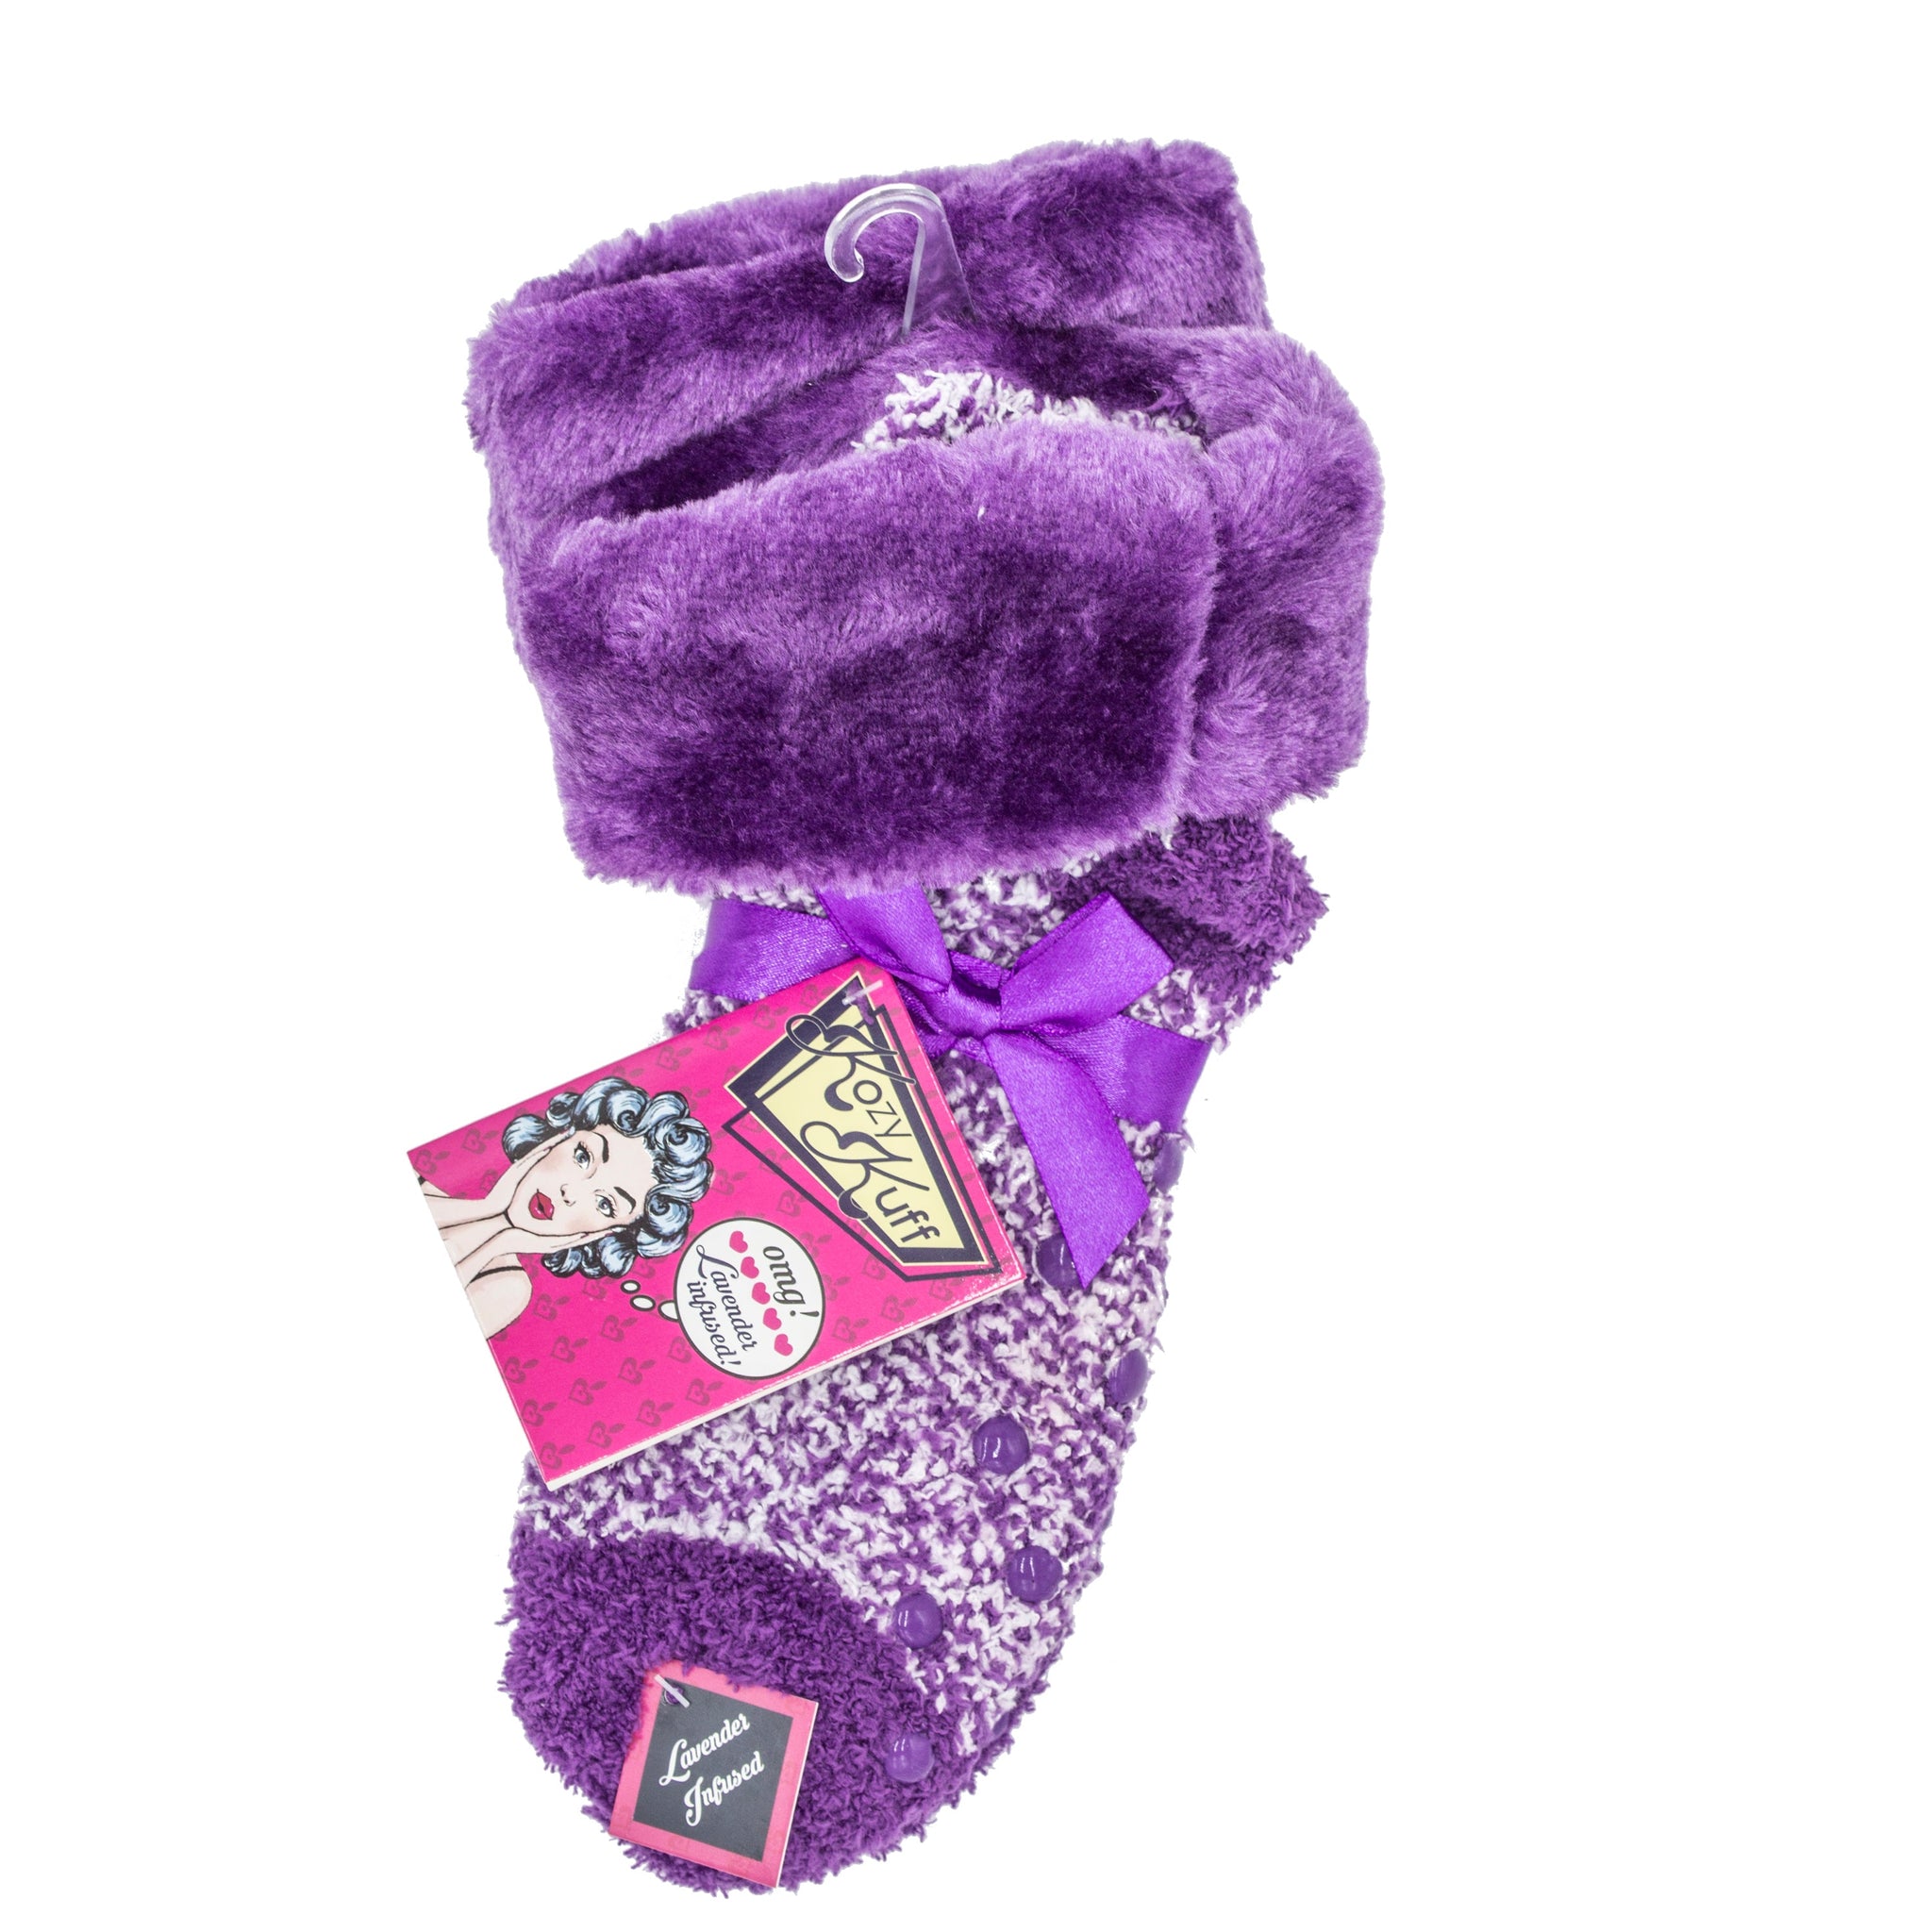 Non-Skid Fur Cuff Chenille Slipper Socks Fuzzy Heather Black One Size Fits All By MinxNY